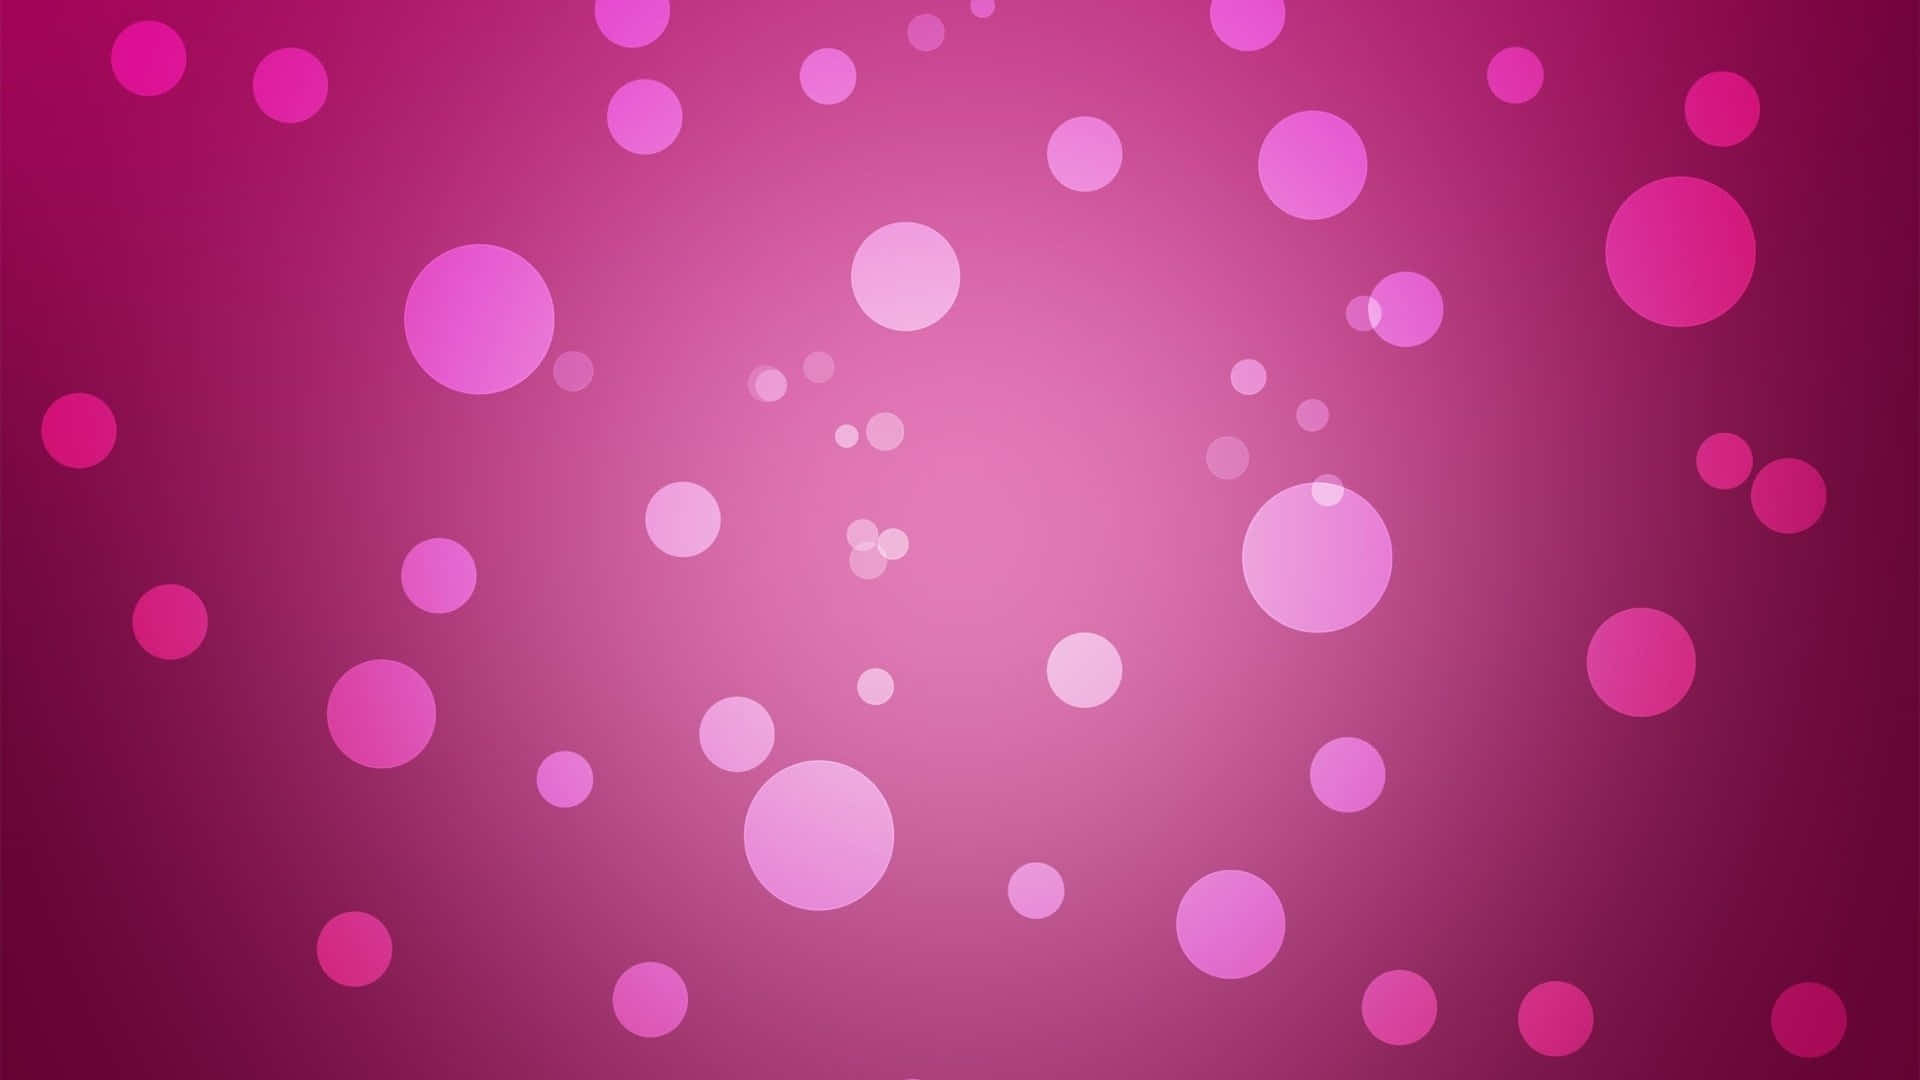 Elegant Pink Girly Background for a Modern Feminine Touch